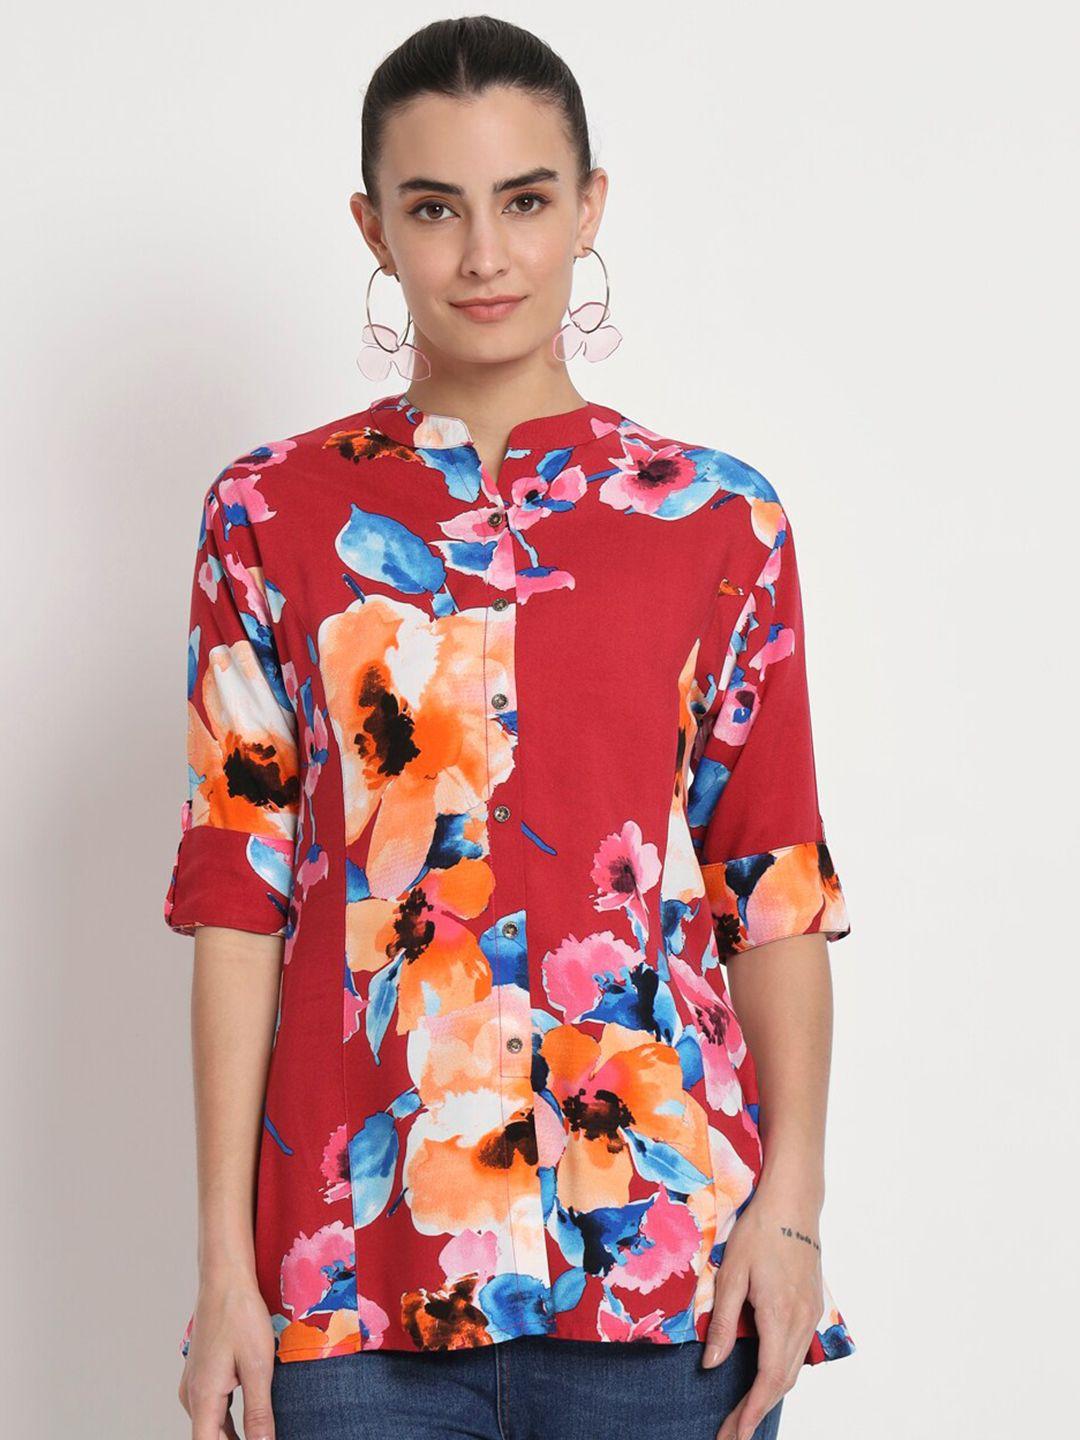 kannan floral printed mandarin collar shirt style top